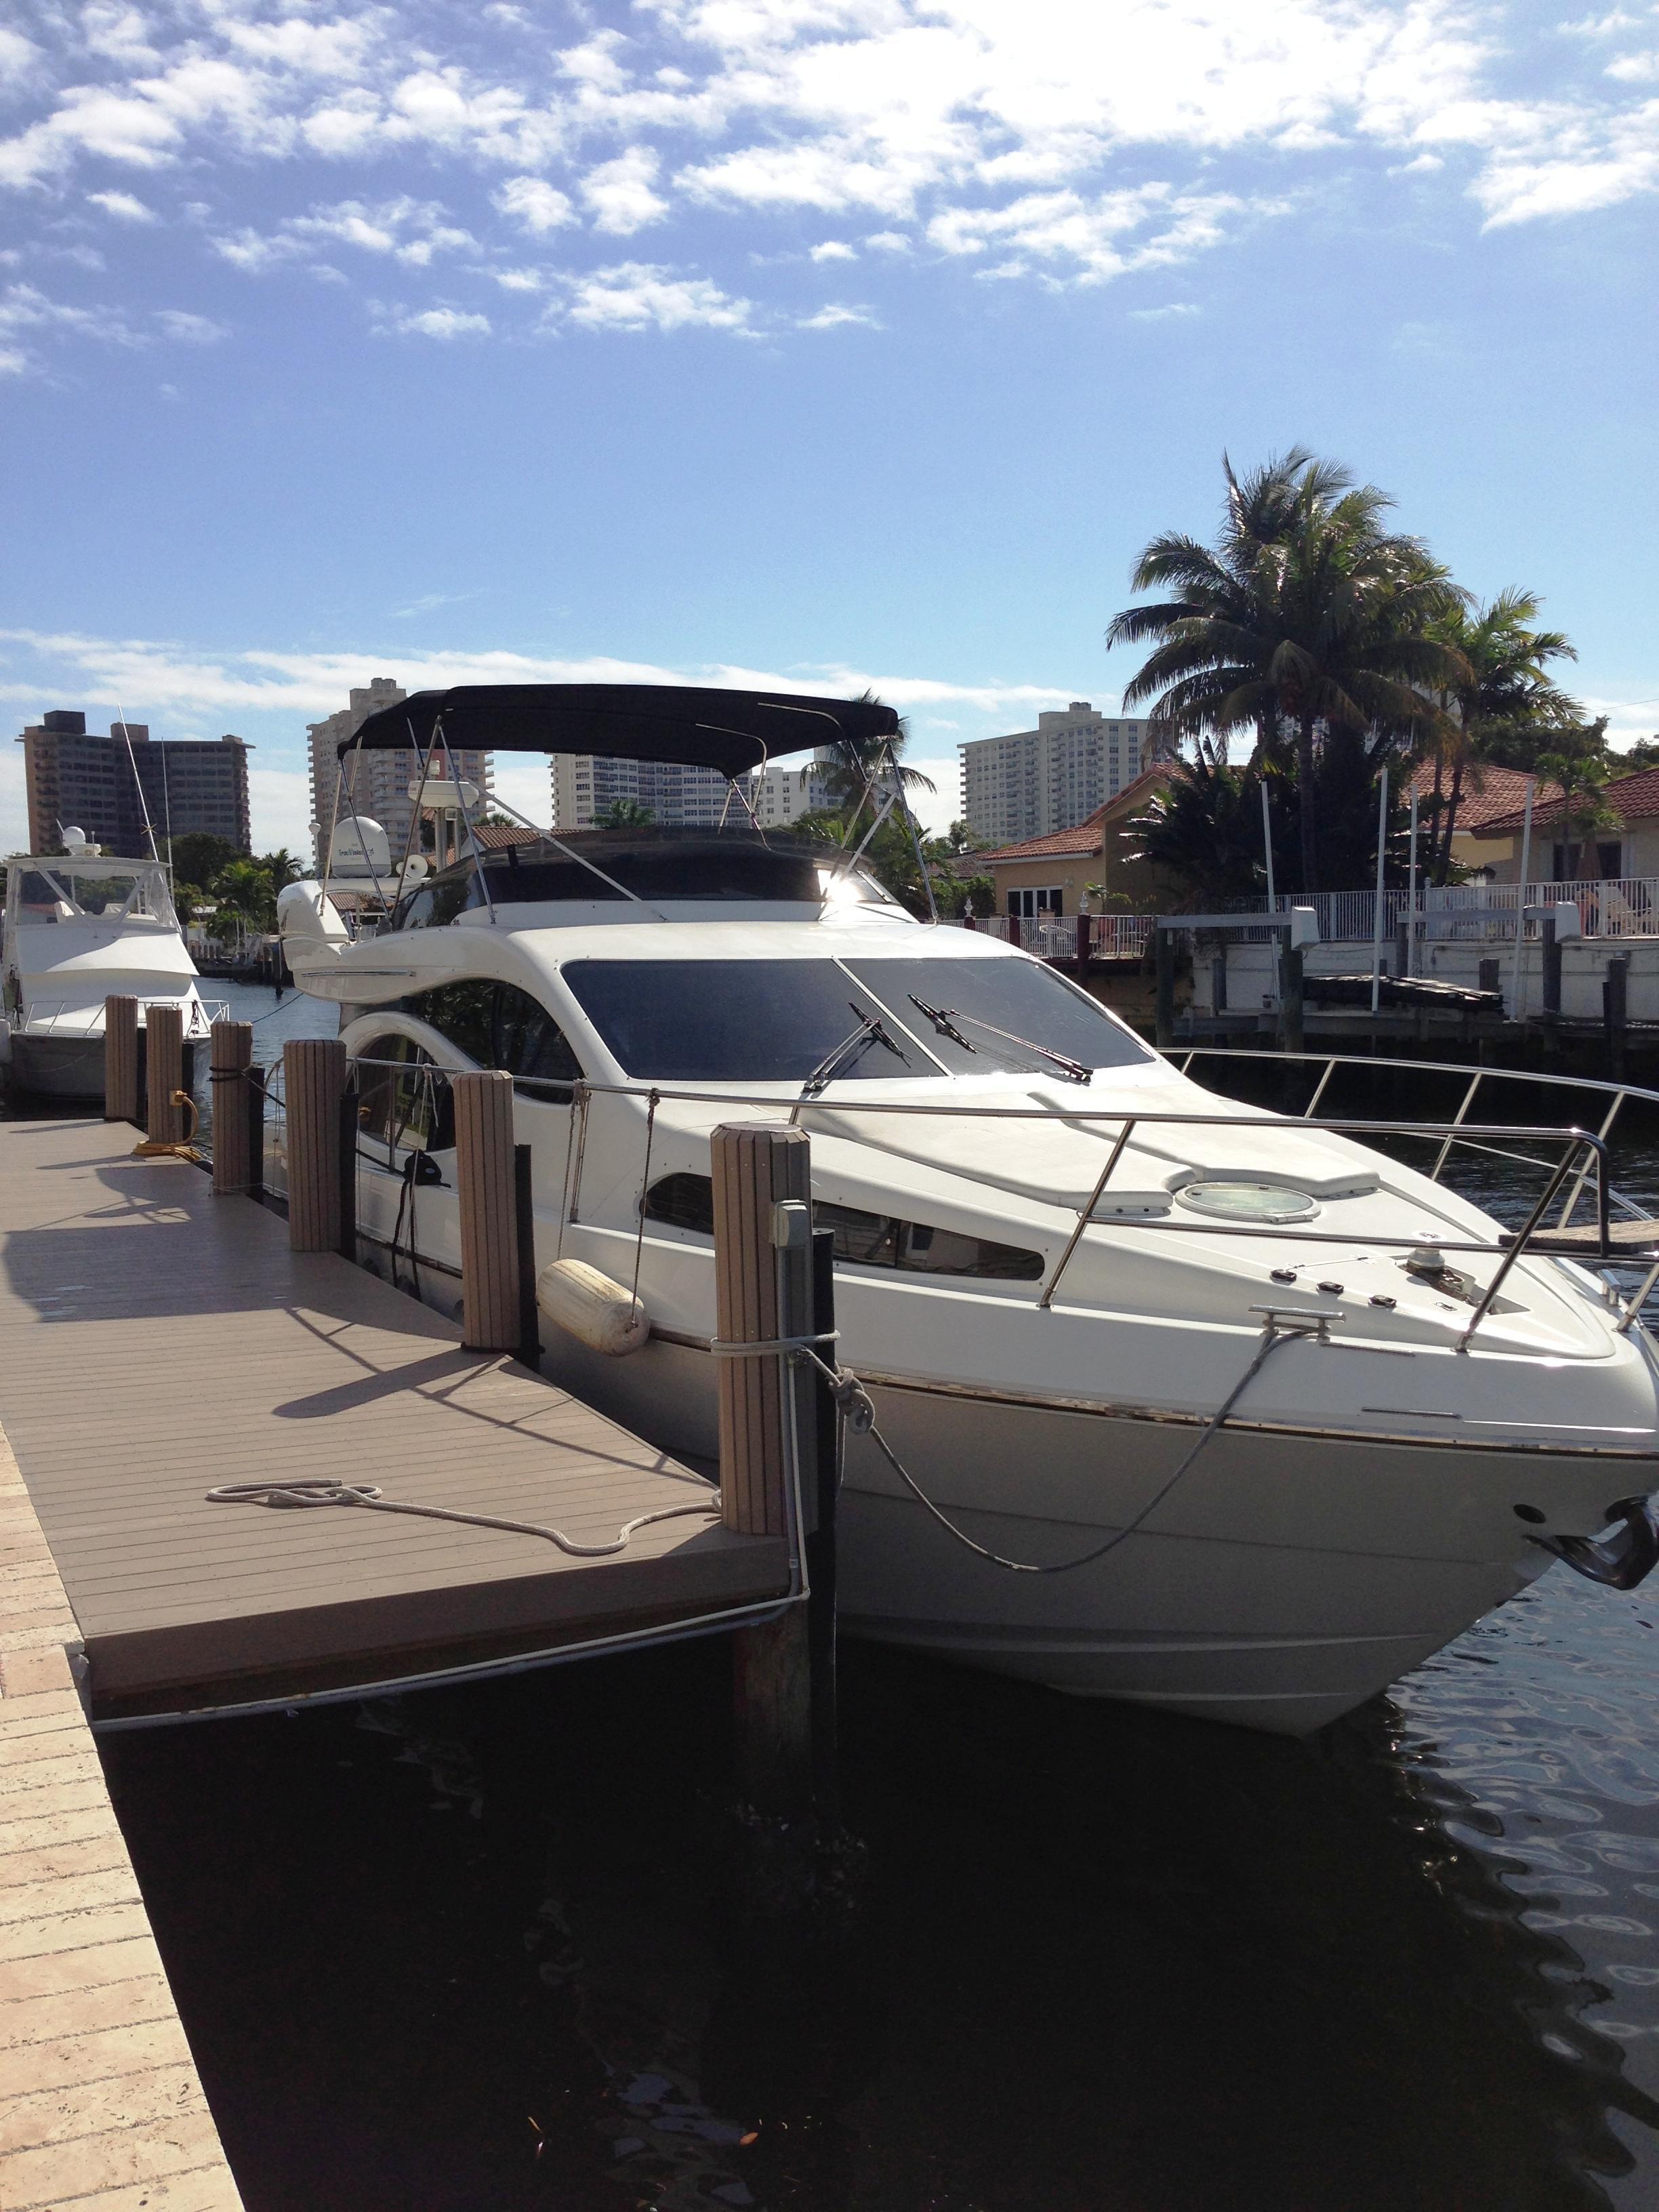 Azimut ybridge Motor Yacht, Fort Lauderdale